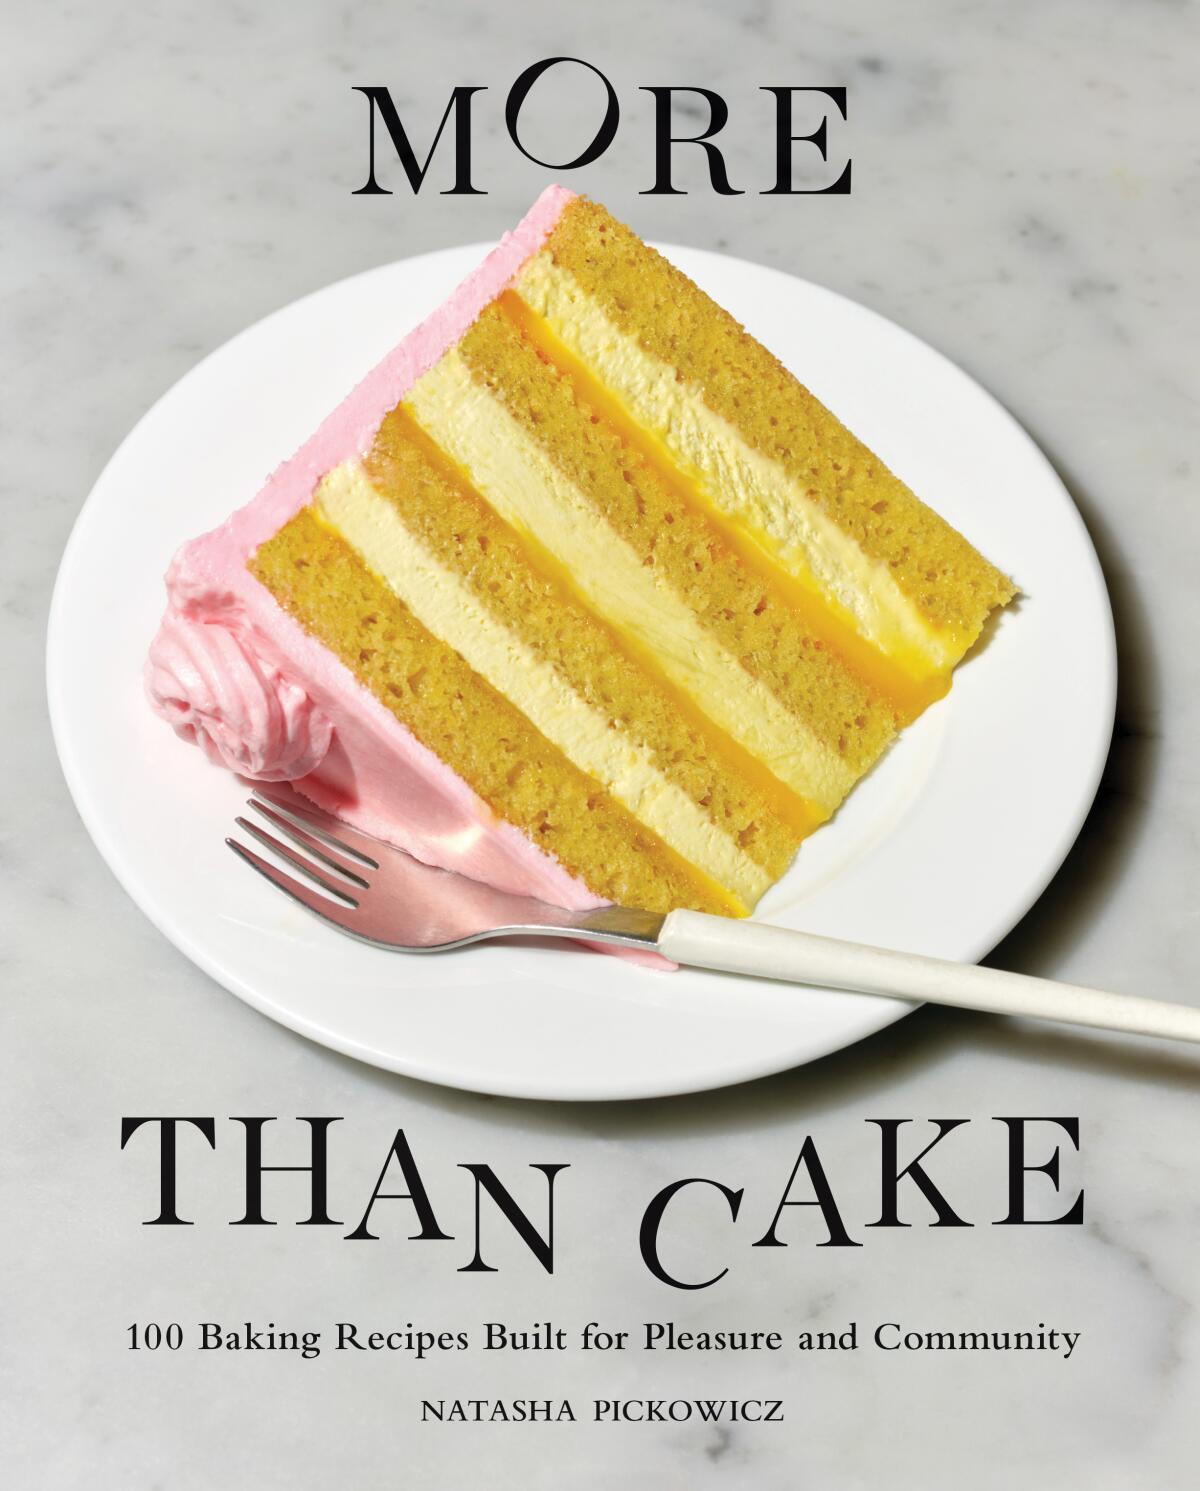 More Than Cake cookbook by Natasha Pickowicz